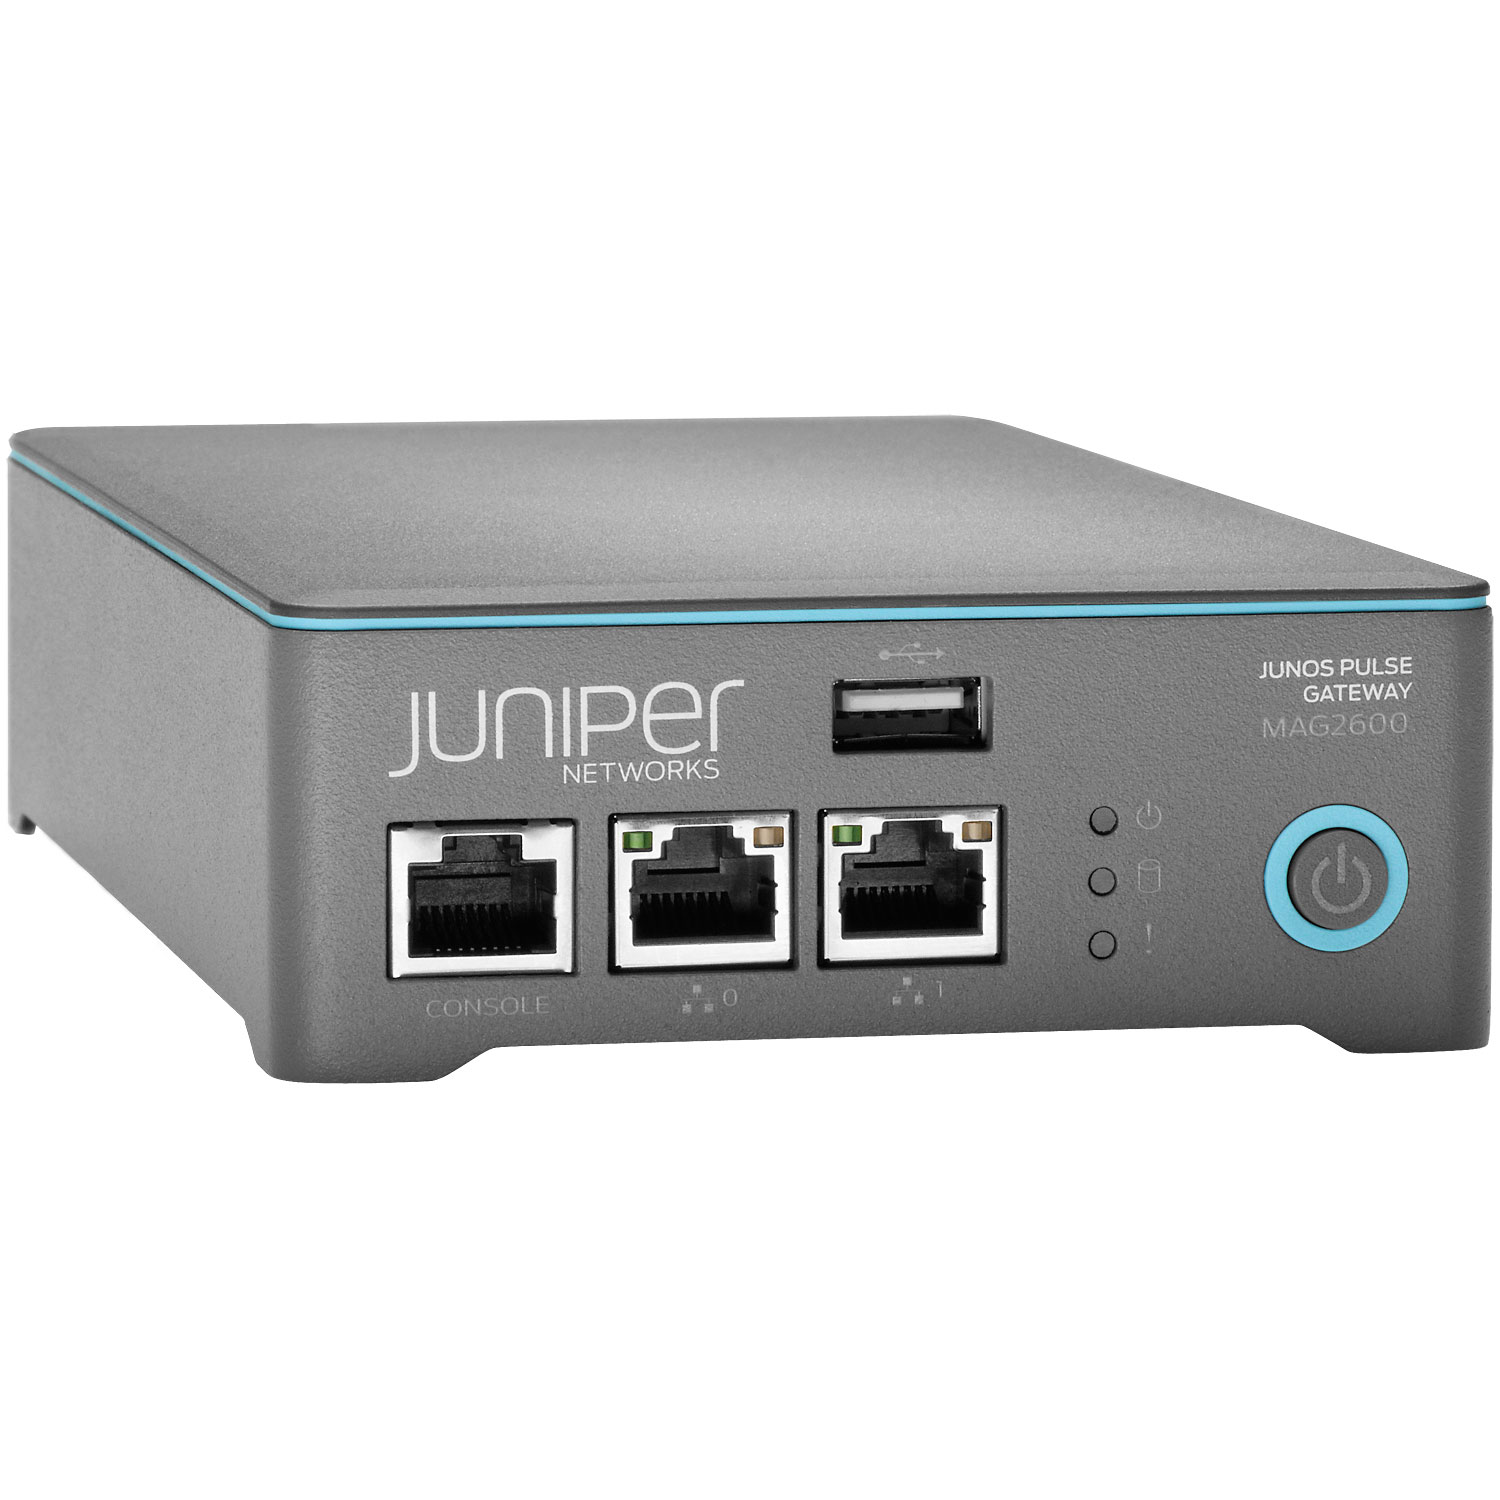 download junos pulse secure client